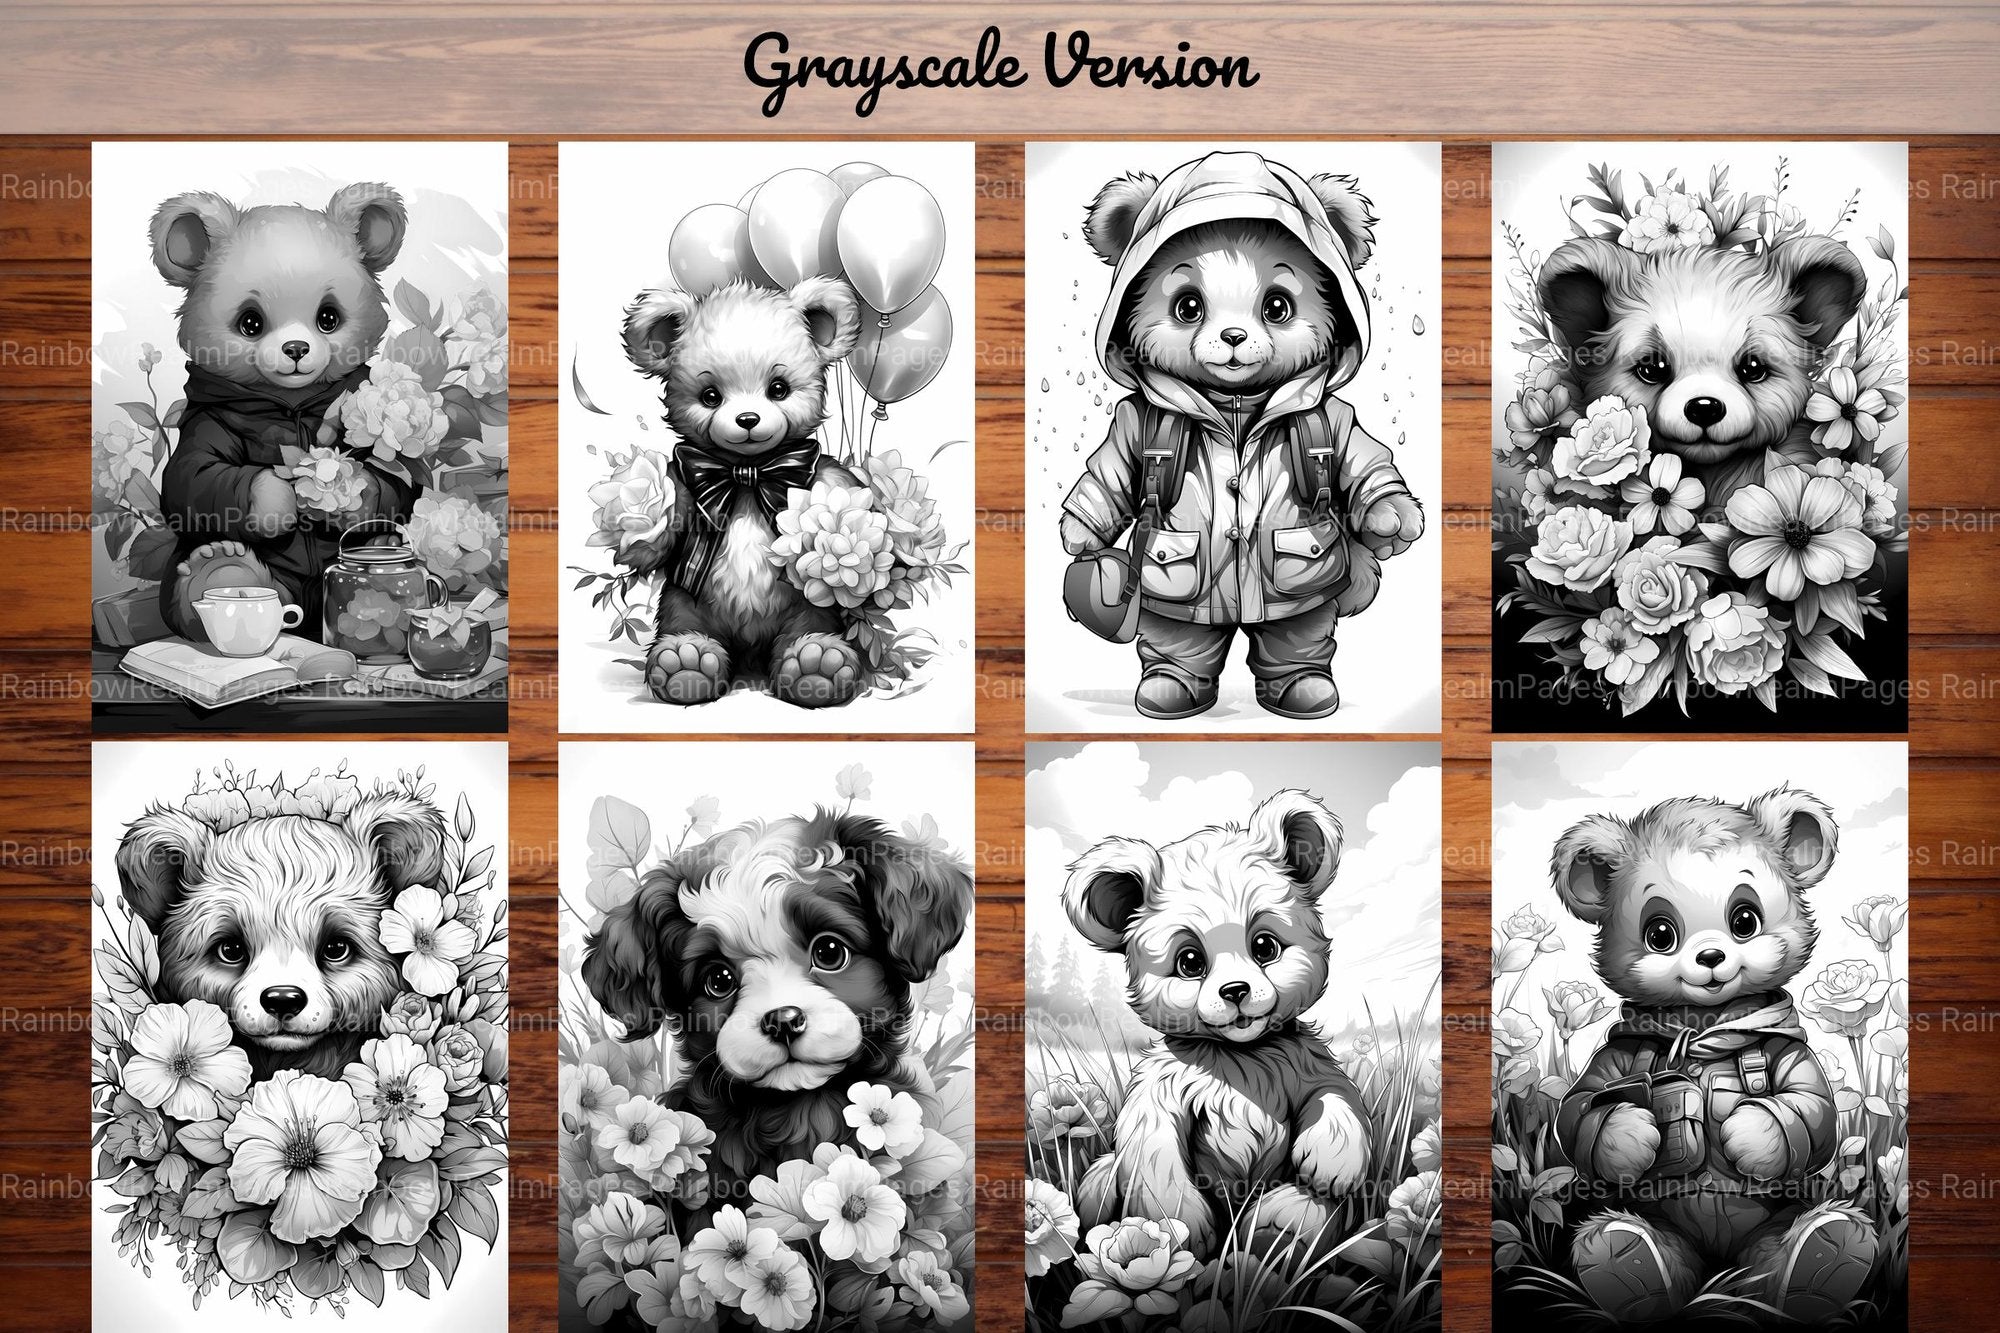 Spring Teddy Bears Coloring Books - CraftNest